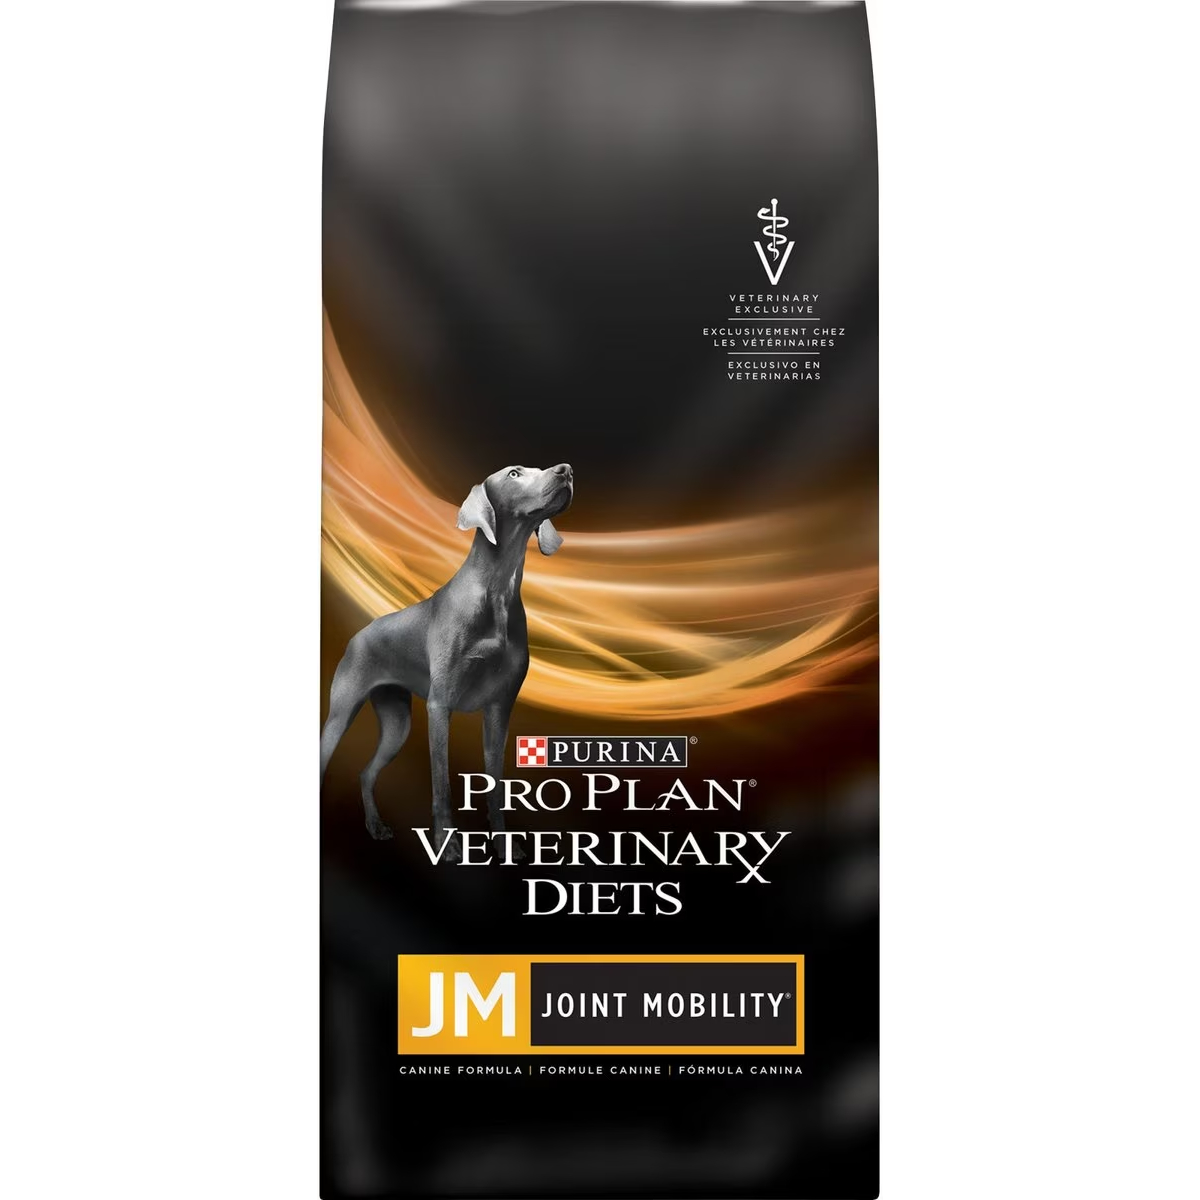 Purina Pro Plan Veterinary Diets JM Dog Food